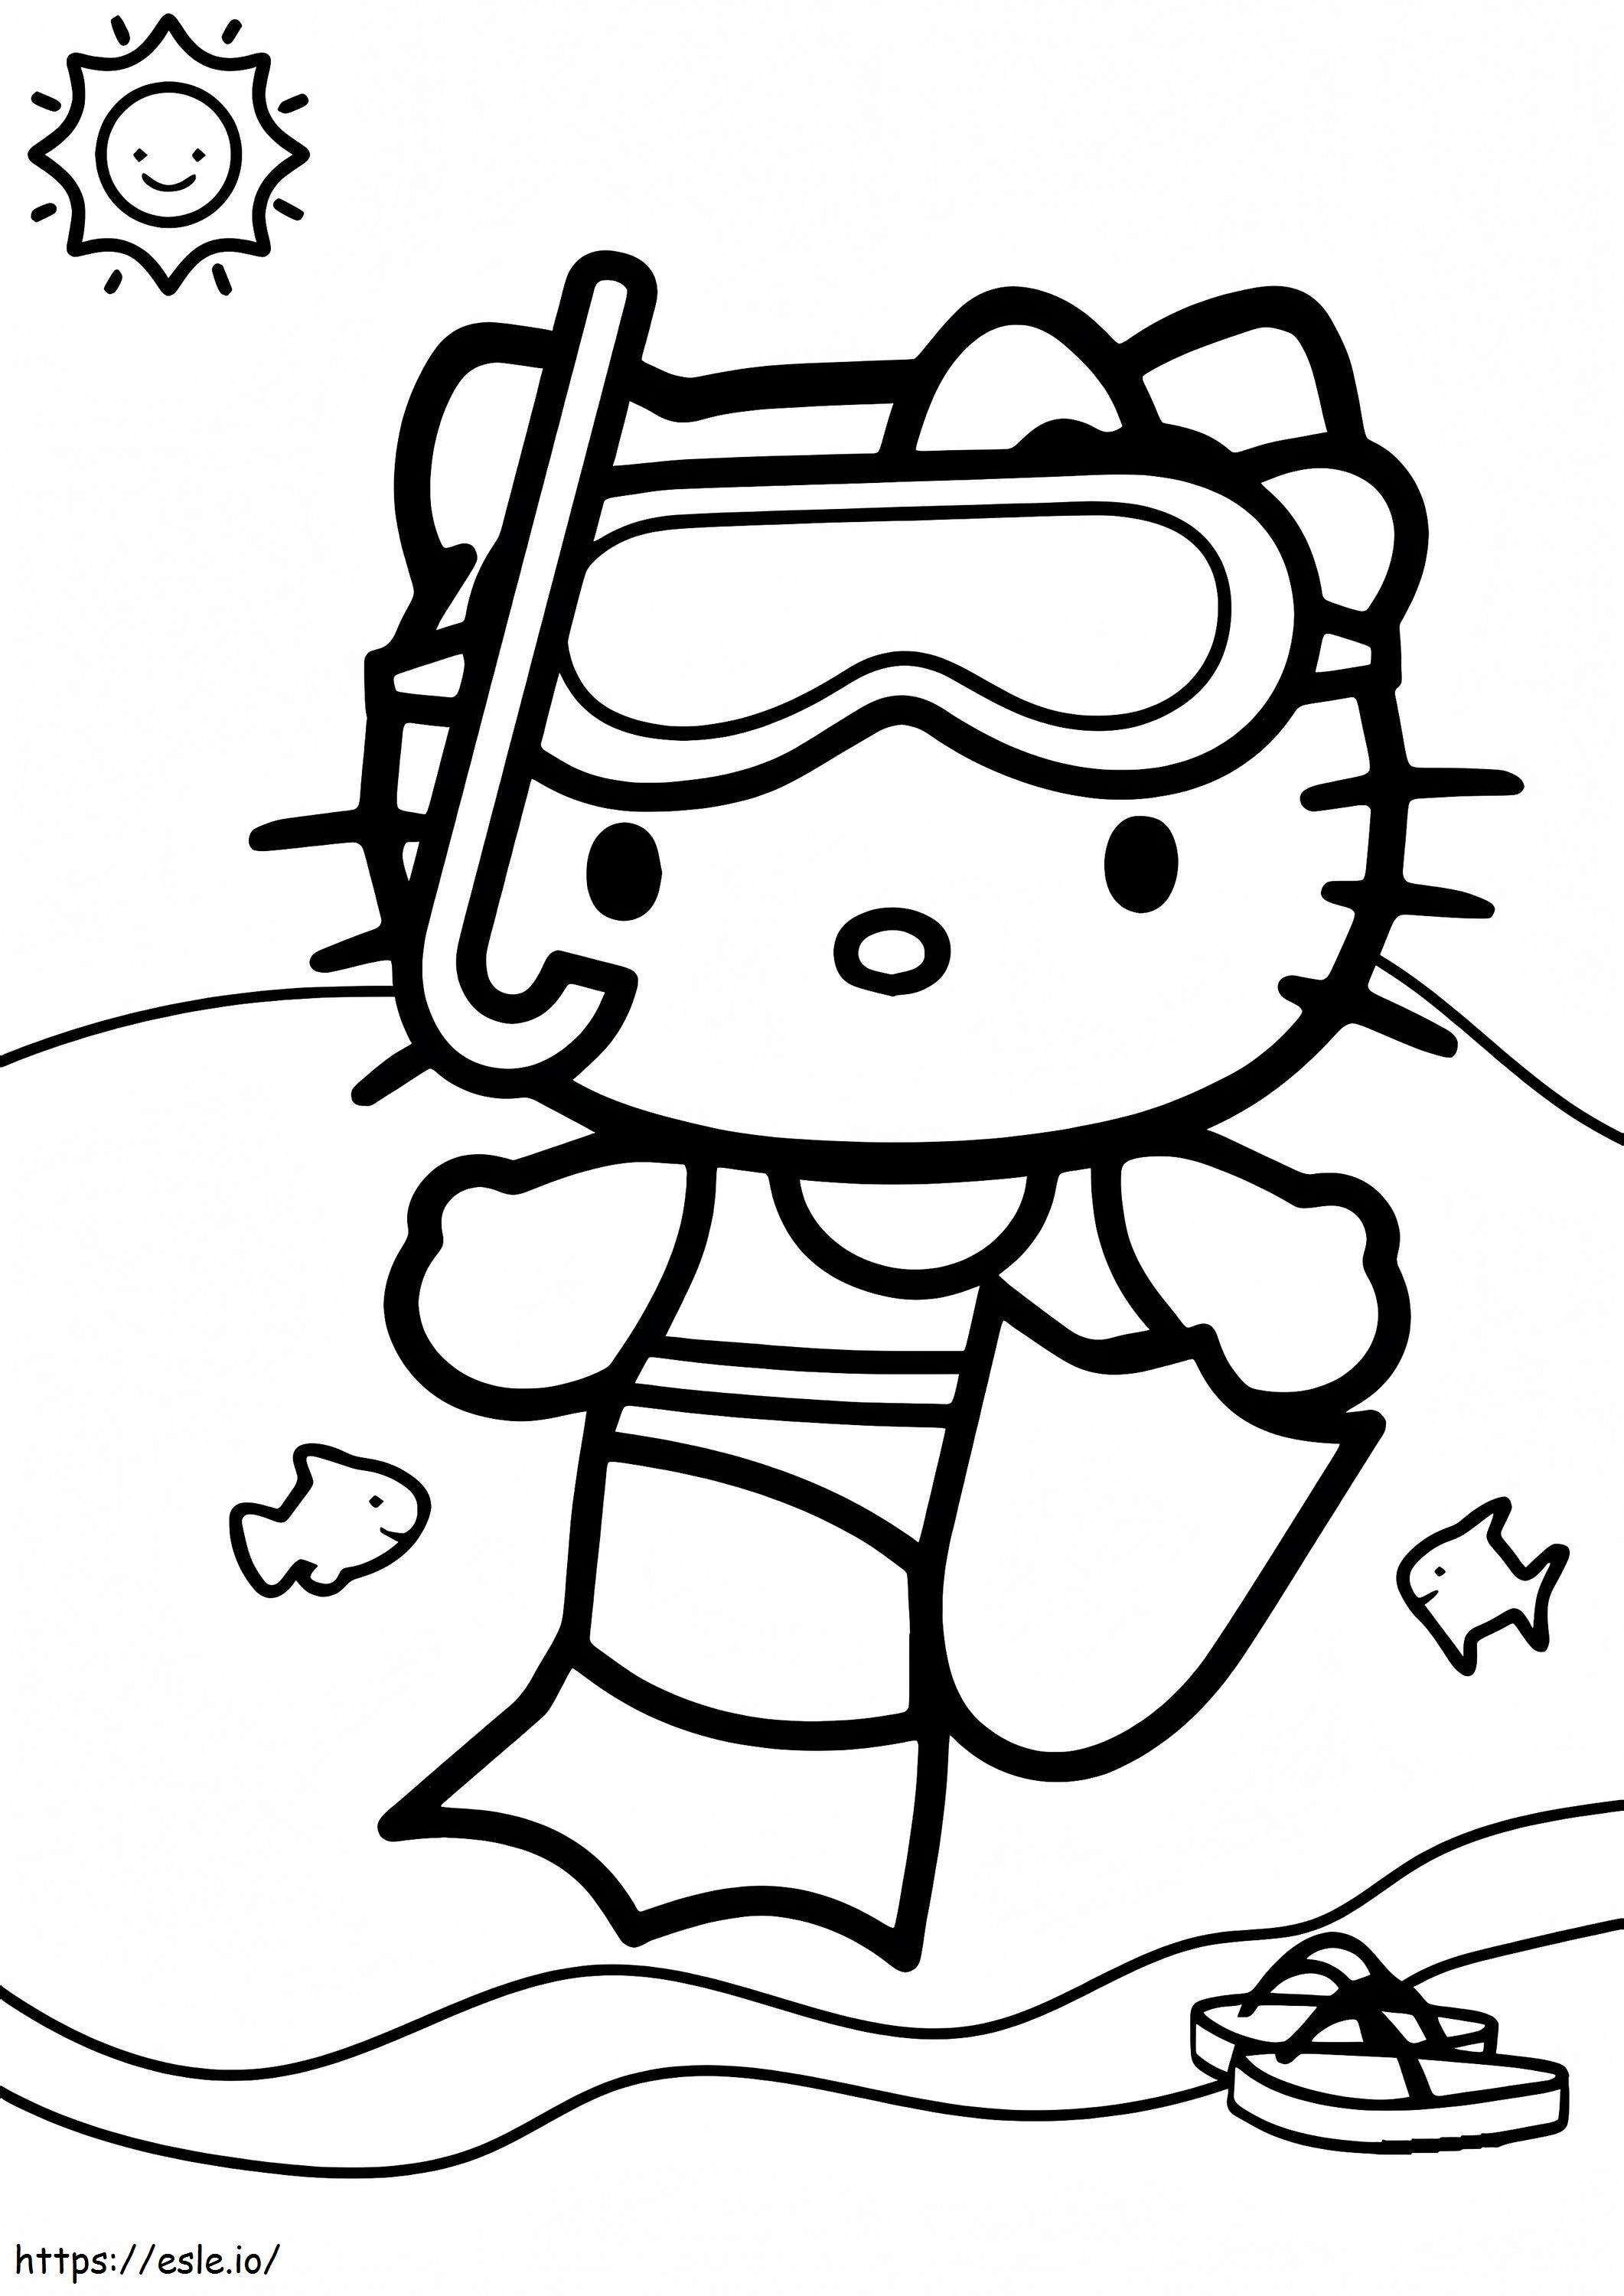 Coloriage Hello Kitty va nager à imprimer dessin